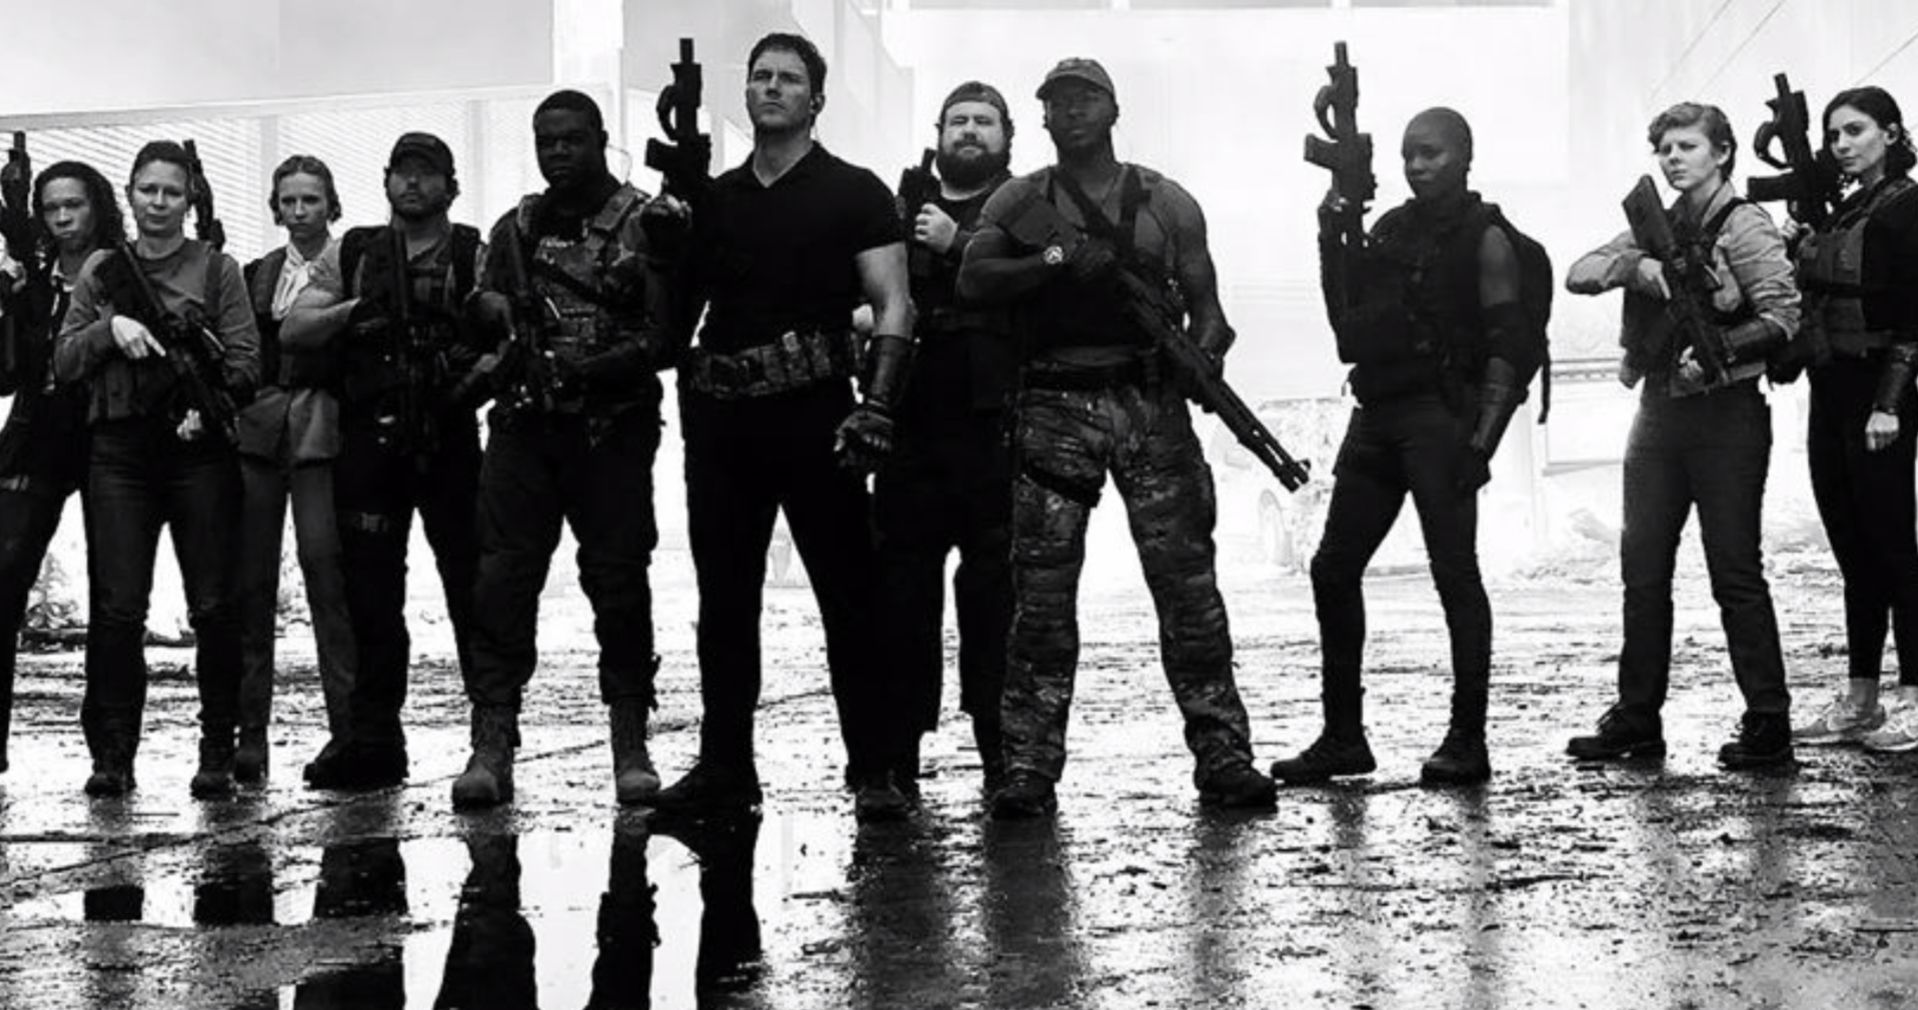 The Tomorrow War First Look Has Chris Pratt's Alien Fighters Ready for Battle